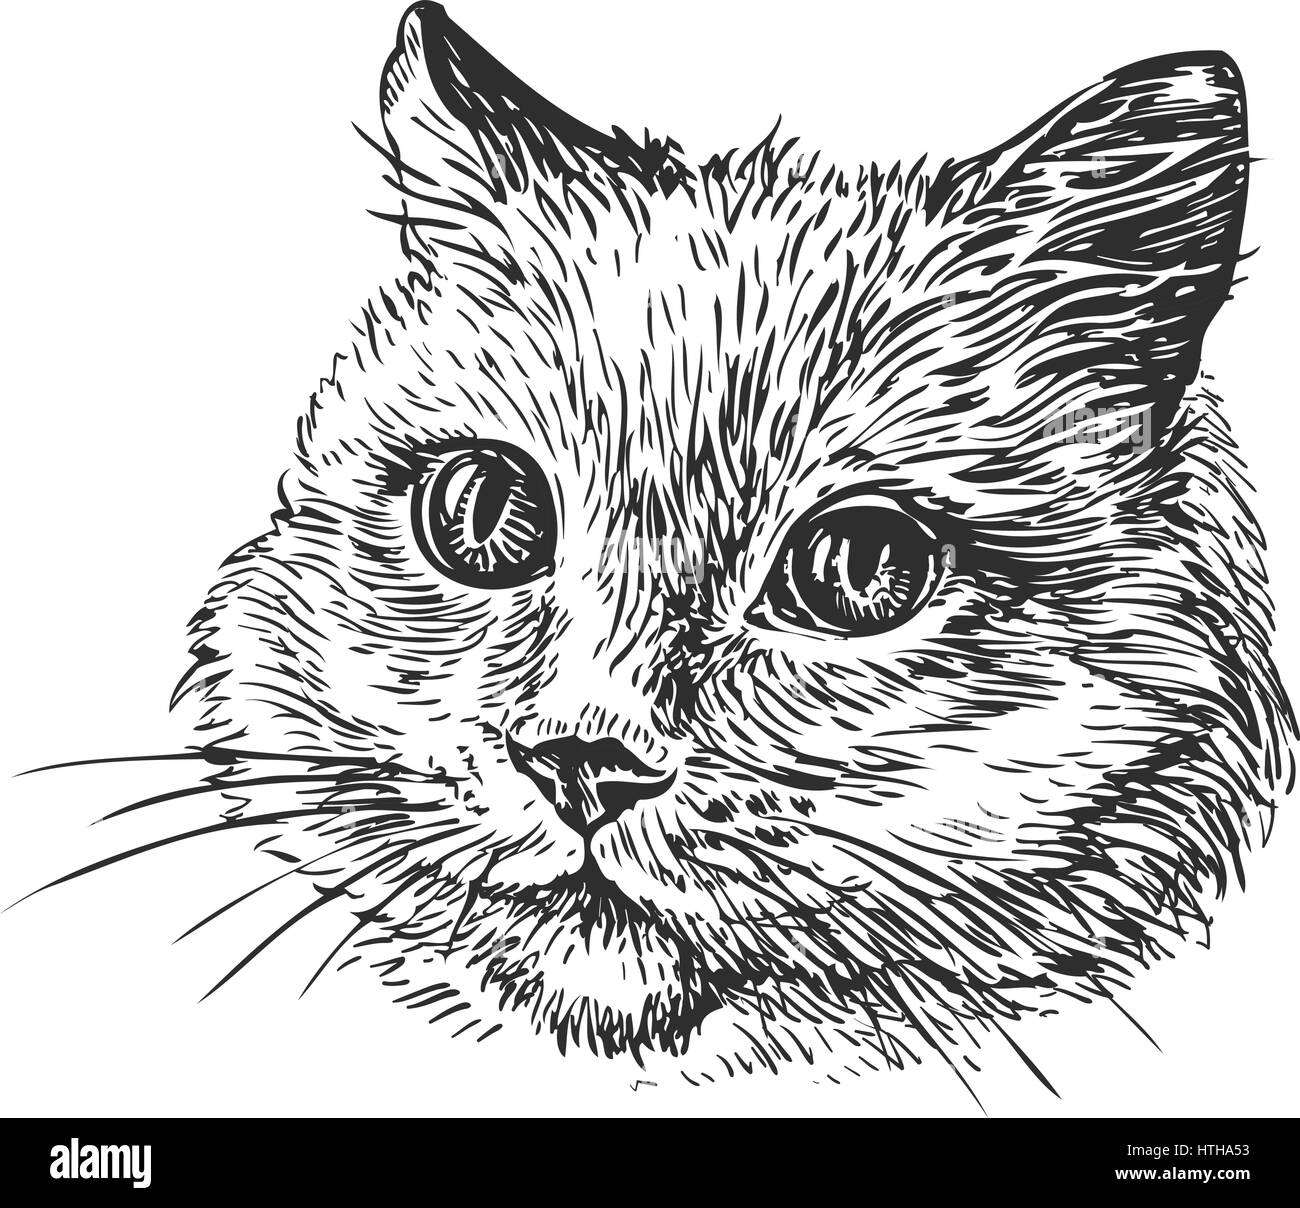 Hand-drawn portrait of cat. Sketch vector illustration Stock Vector